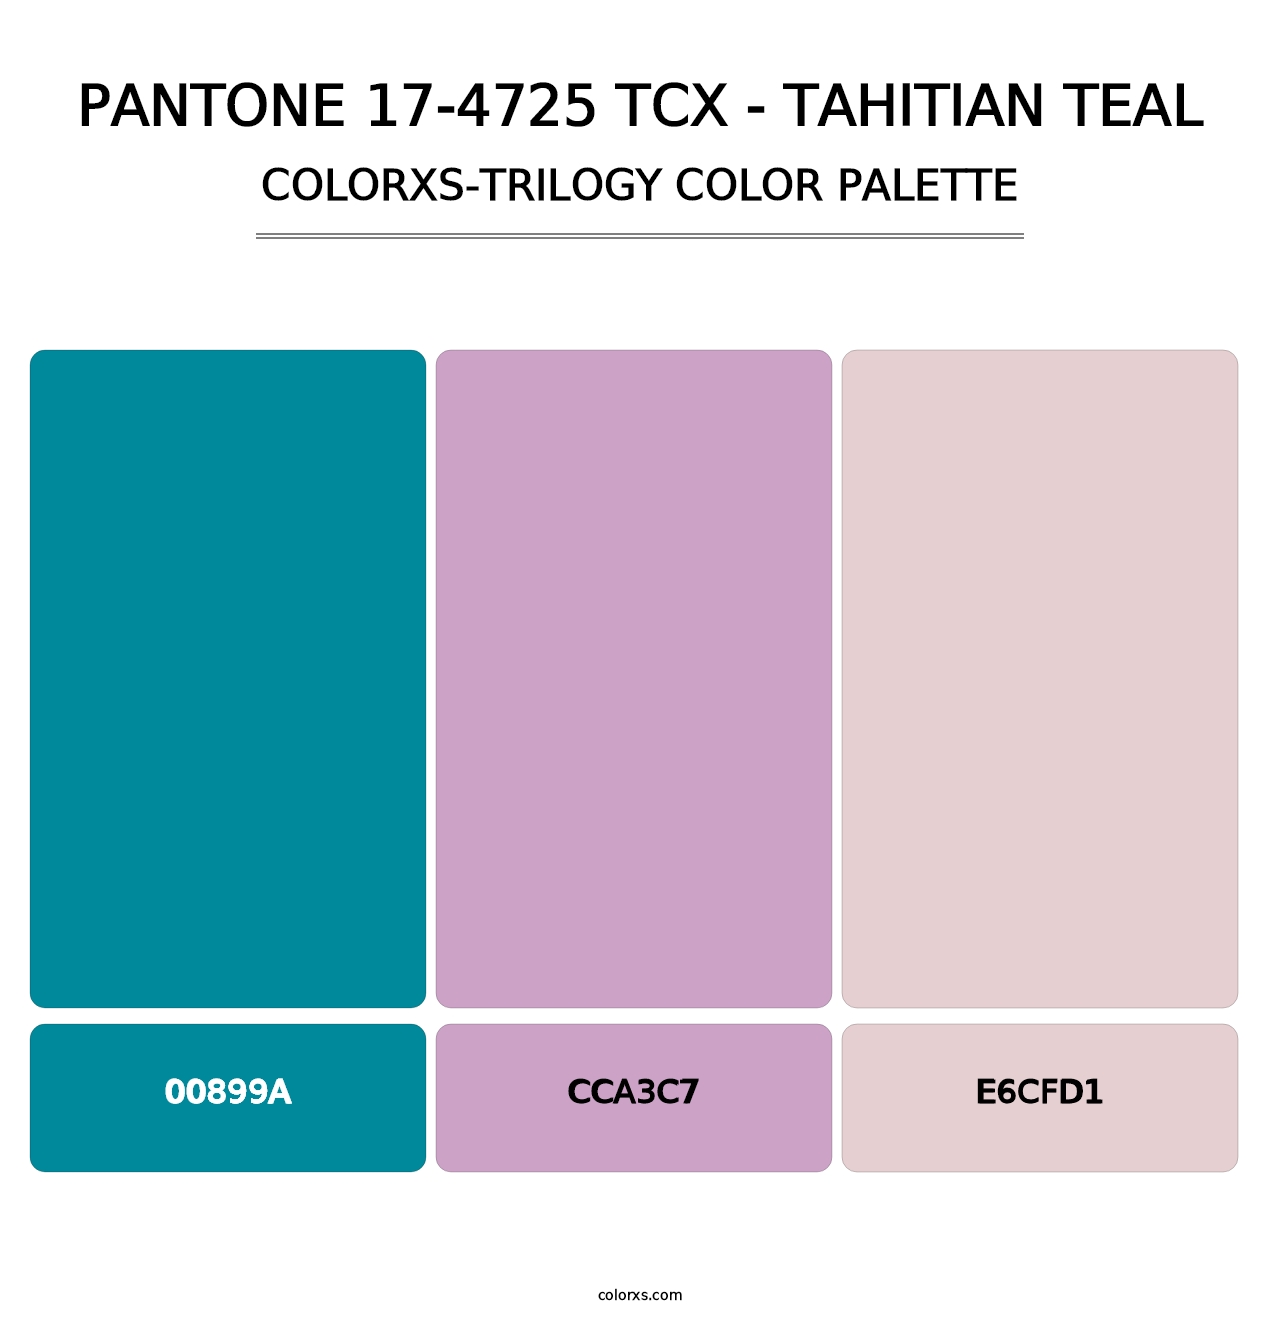 PANTONE 17-4725 TCX - Tahitian Teal - Colorxs Trilogy Palette